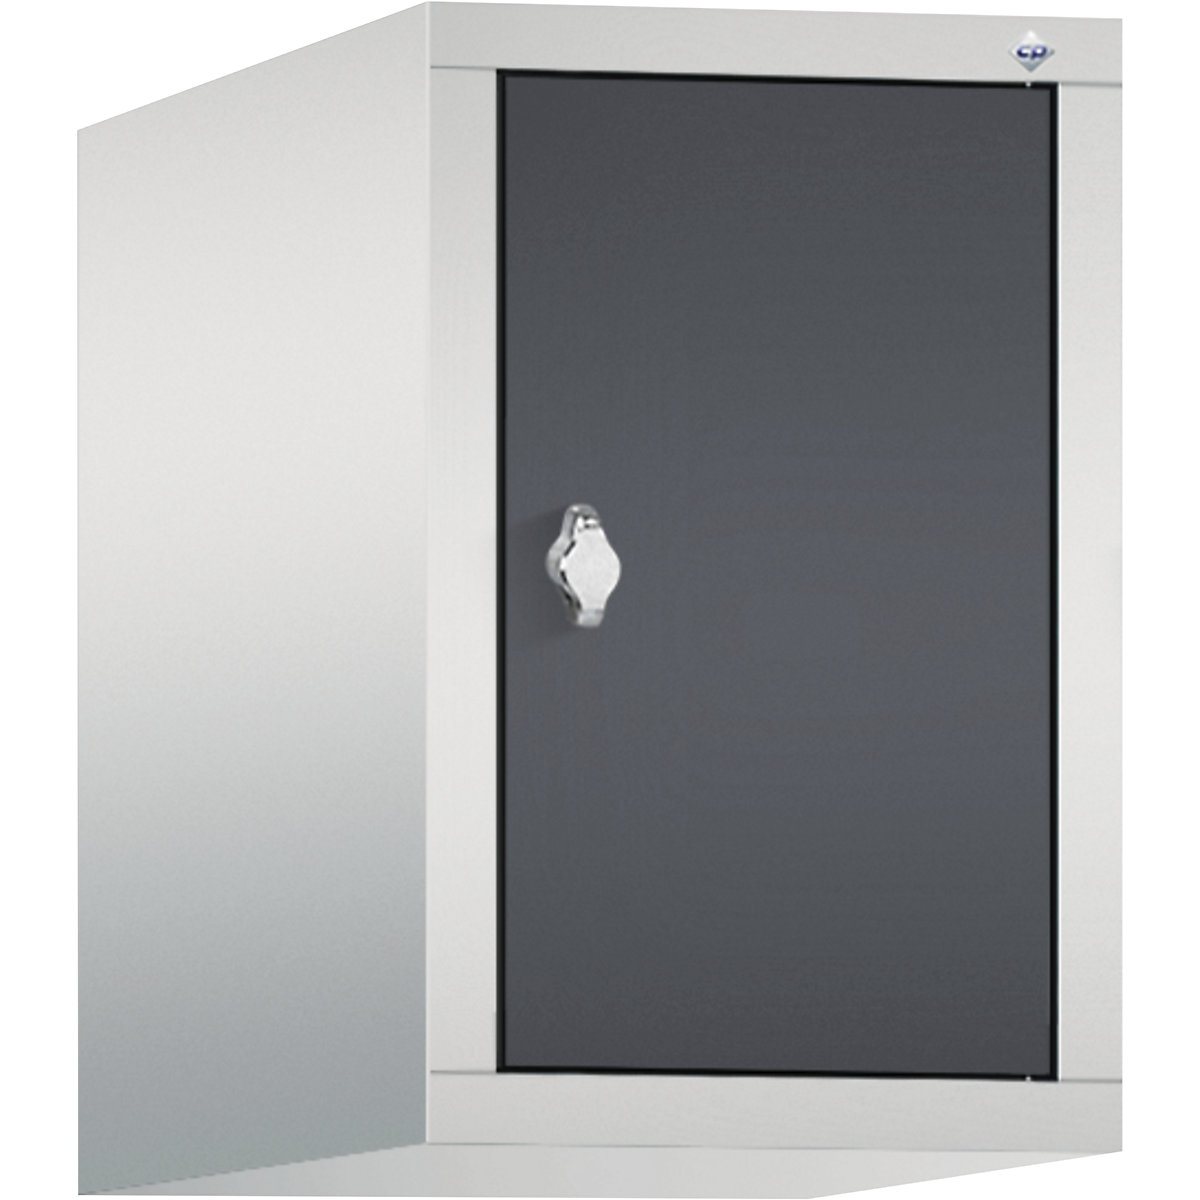 C+P – Altillo CLASSIC, 1 compartimento, anchura de compartimento 300 mm, gris luminoso / gris negruzco